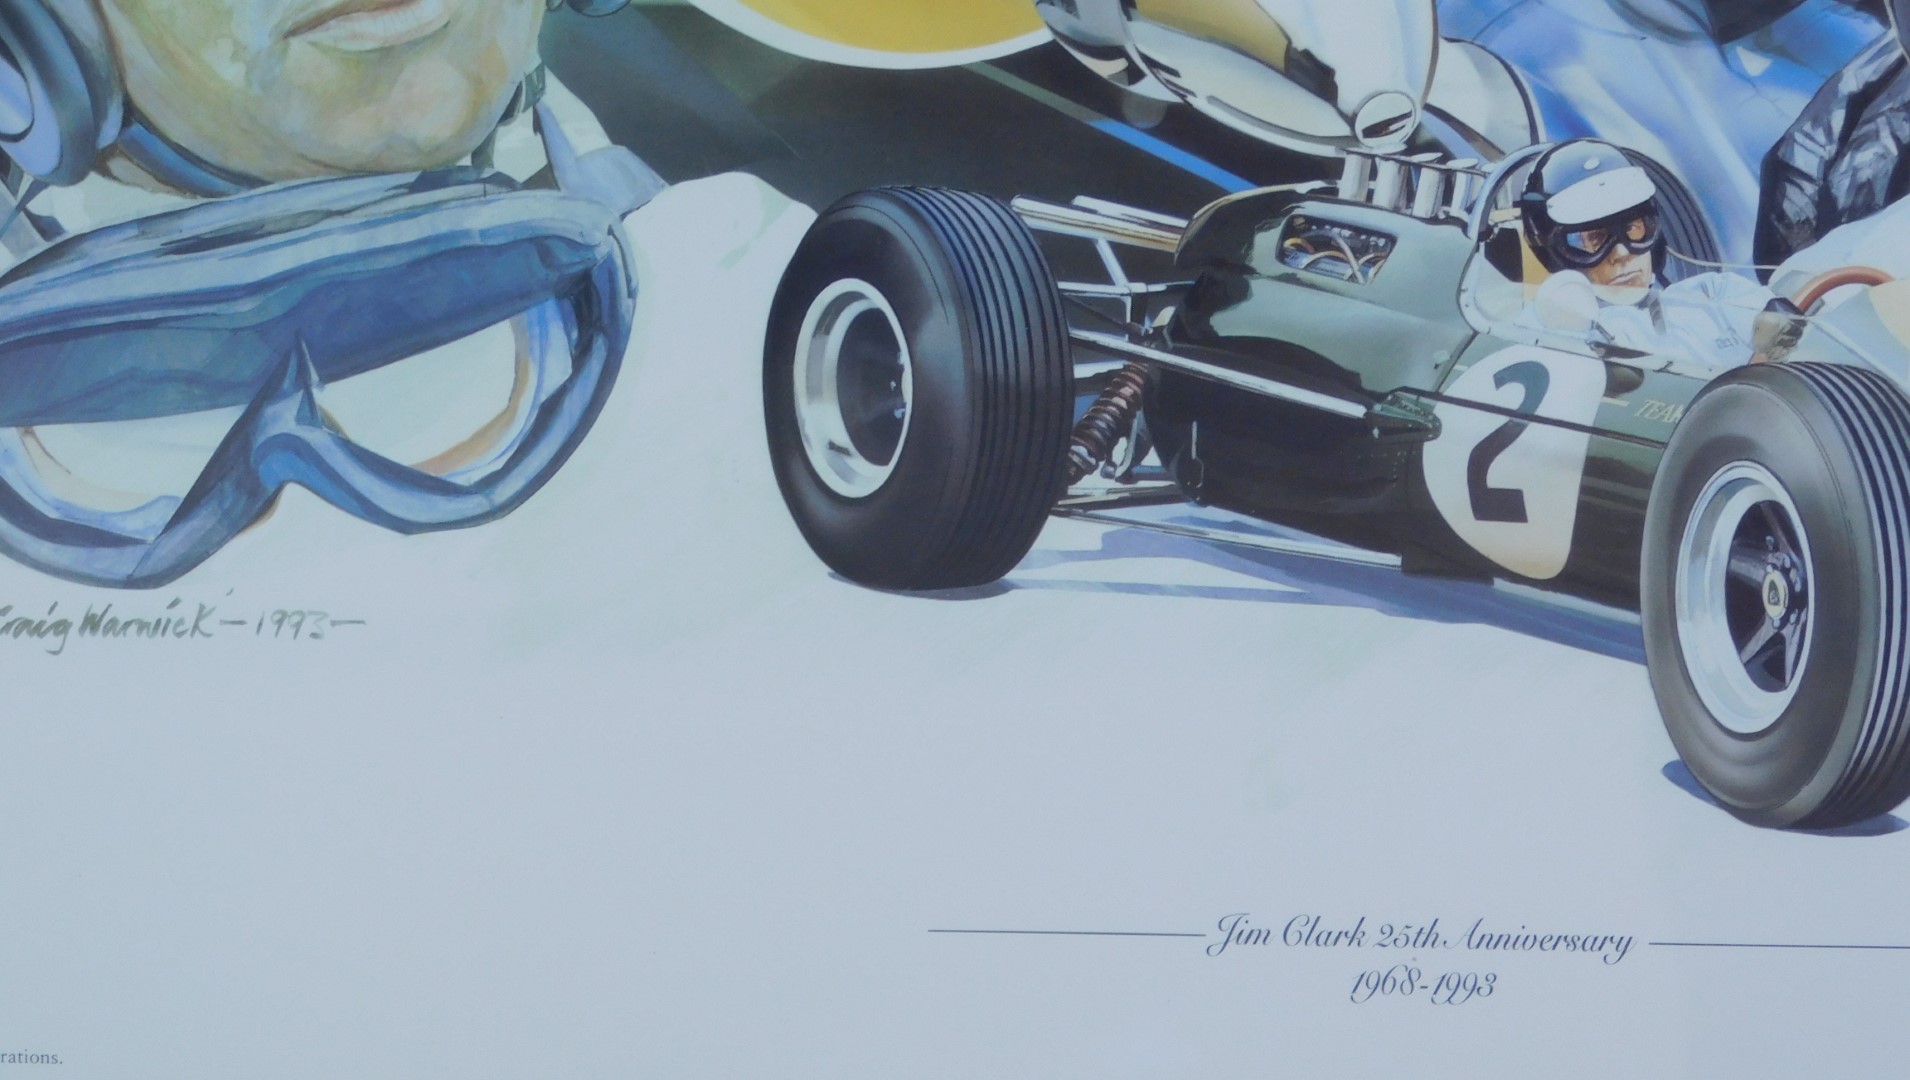 After Craig Warwick. Jim Clark 25th Anniversary motor racing print, 1968 - 1993, limited edition 357 - Image 3 of 4